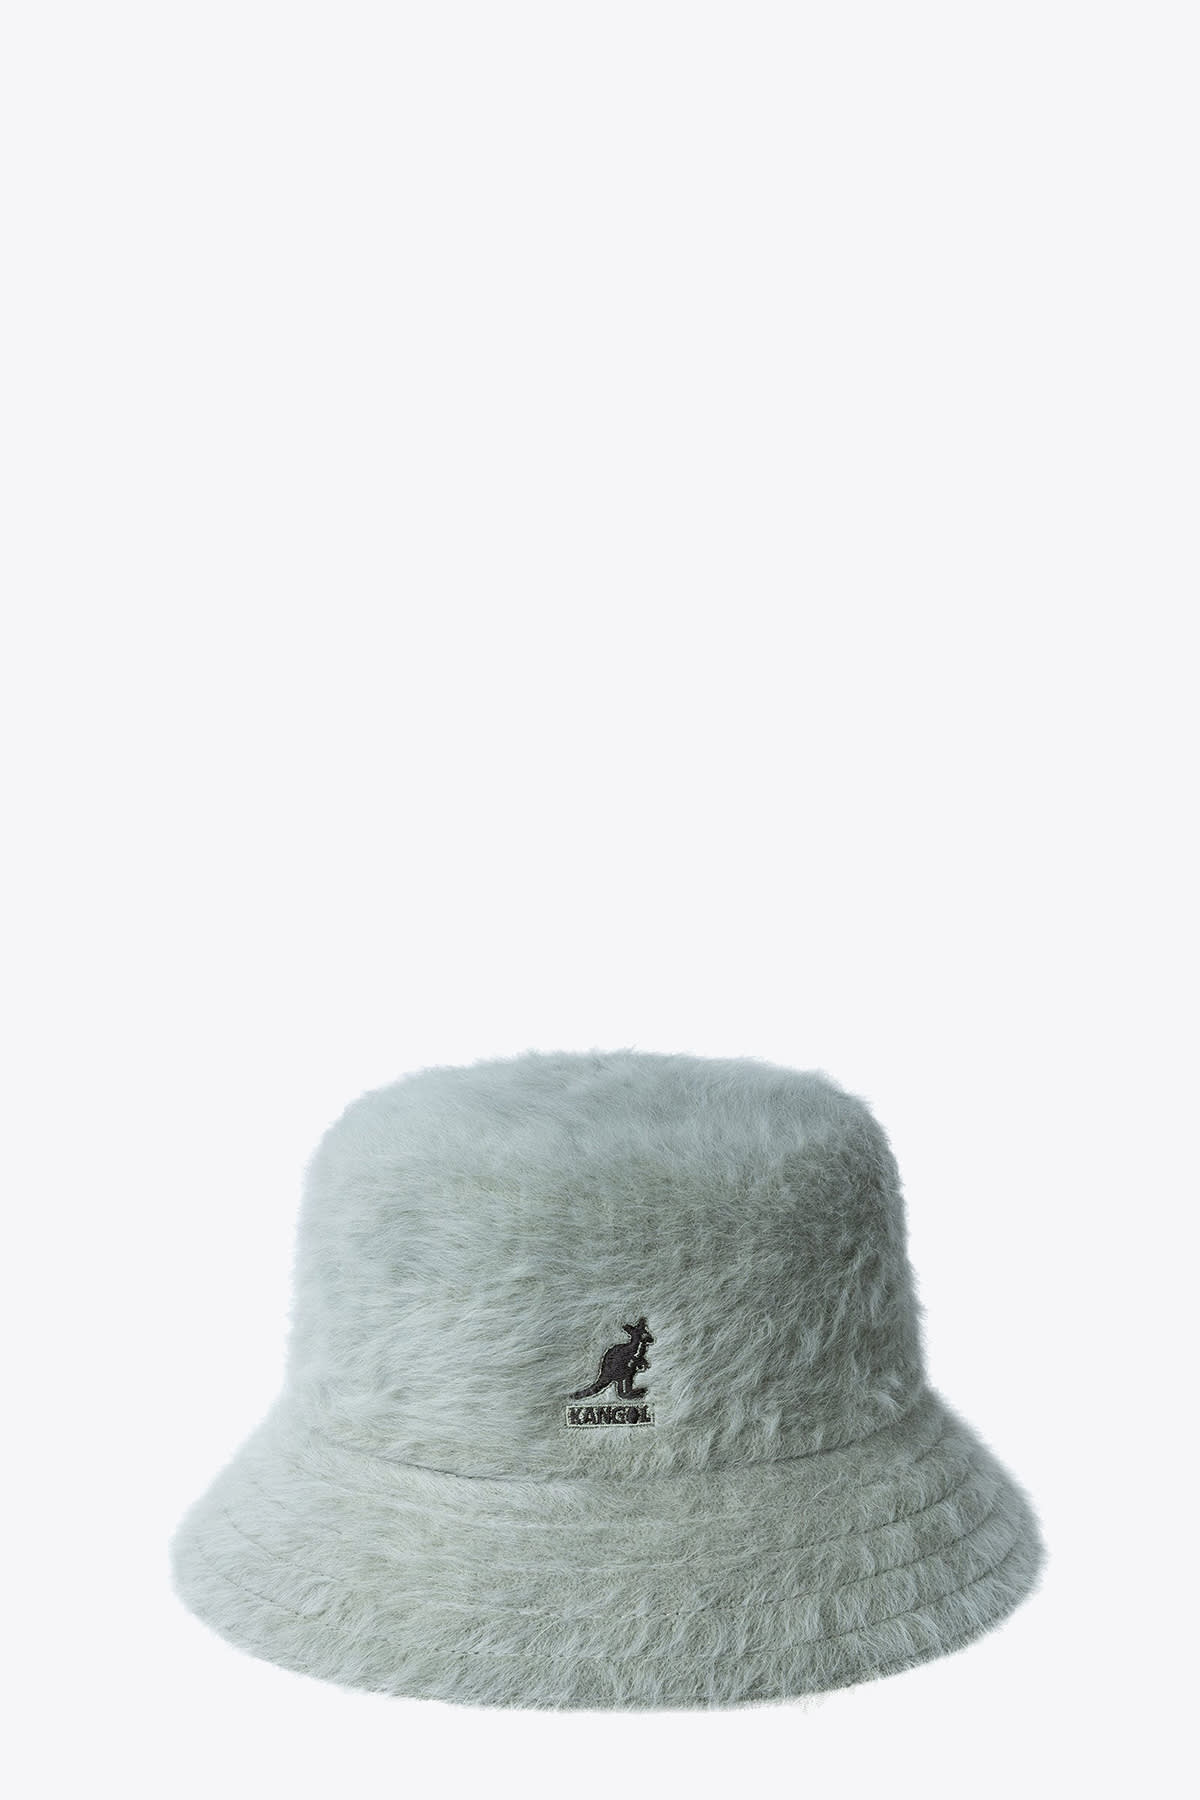 Kangol Furgora Bucket Grey eco-fur bucket hat